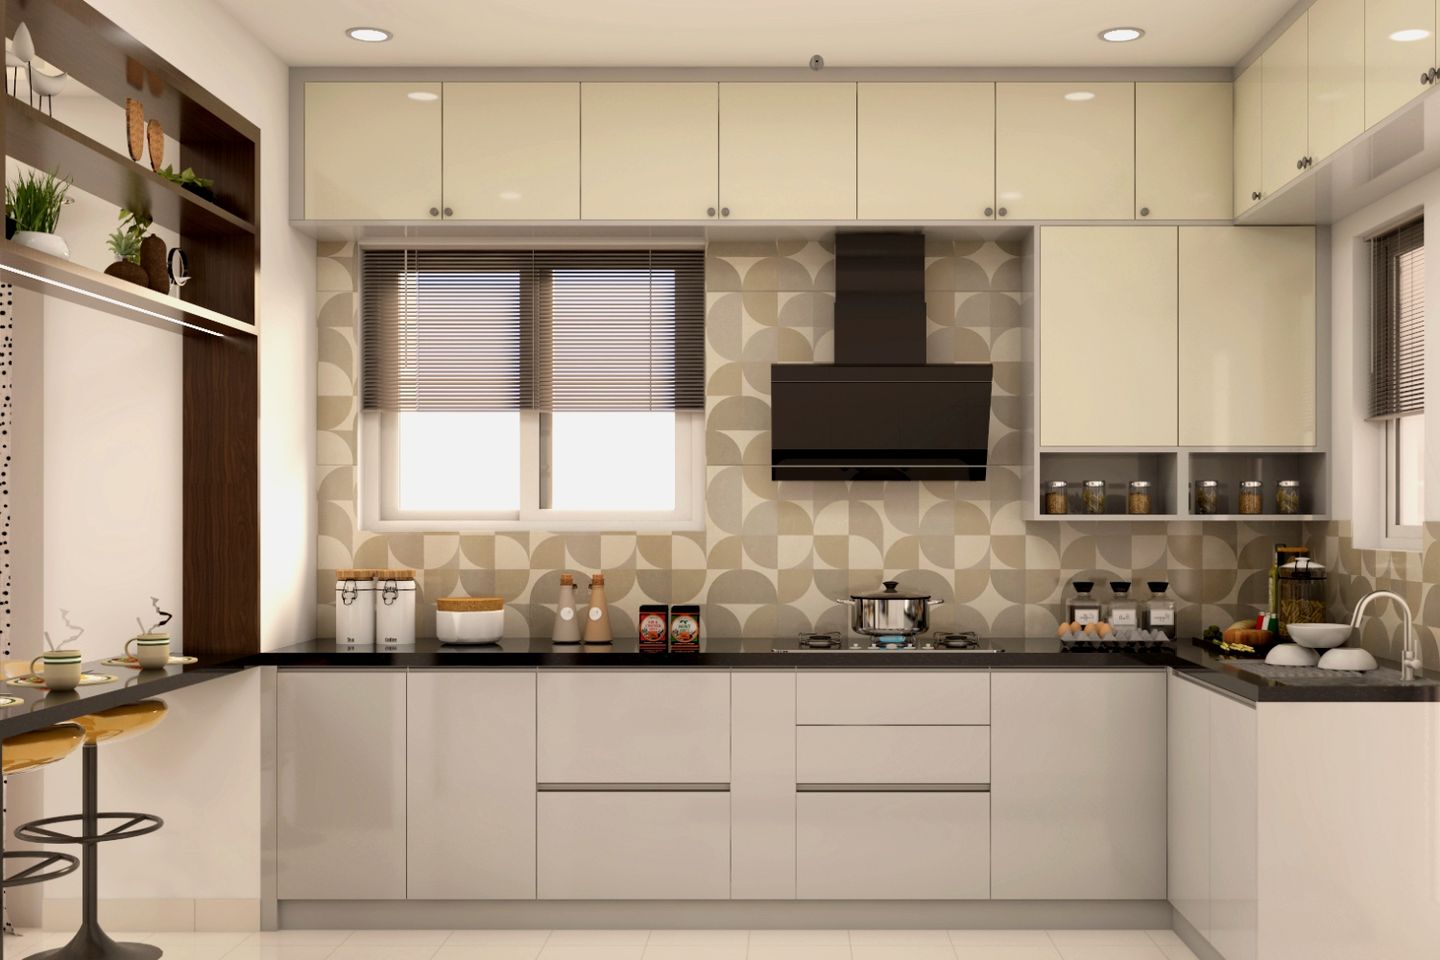 Kitchen Design With Patterned Dado Tiles - Livspace